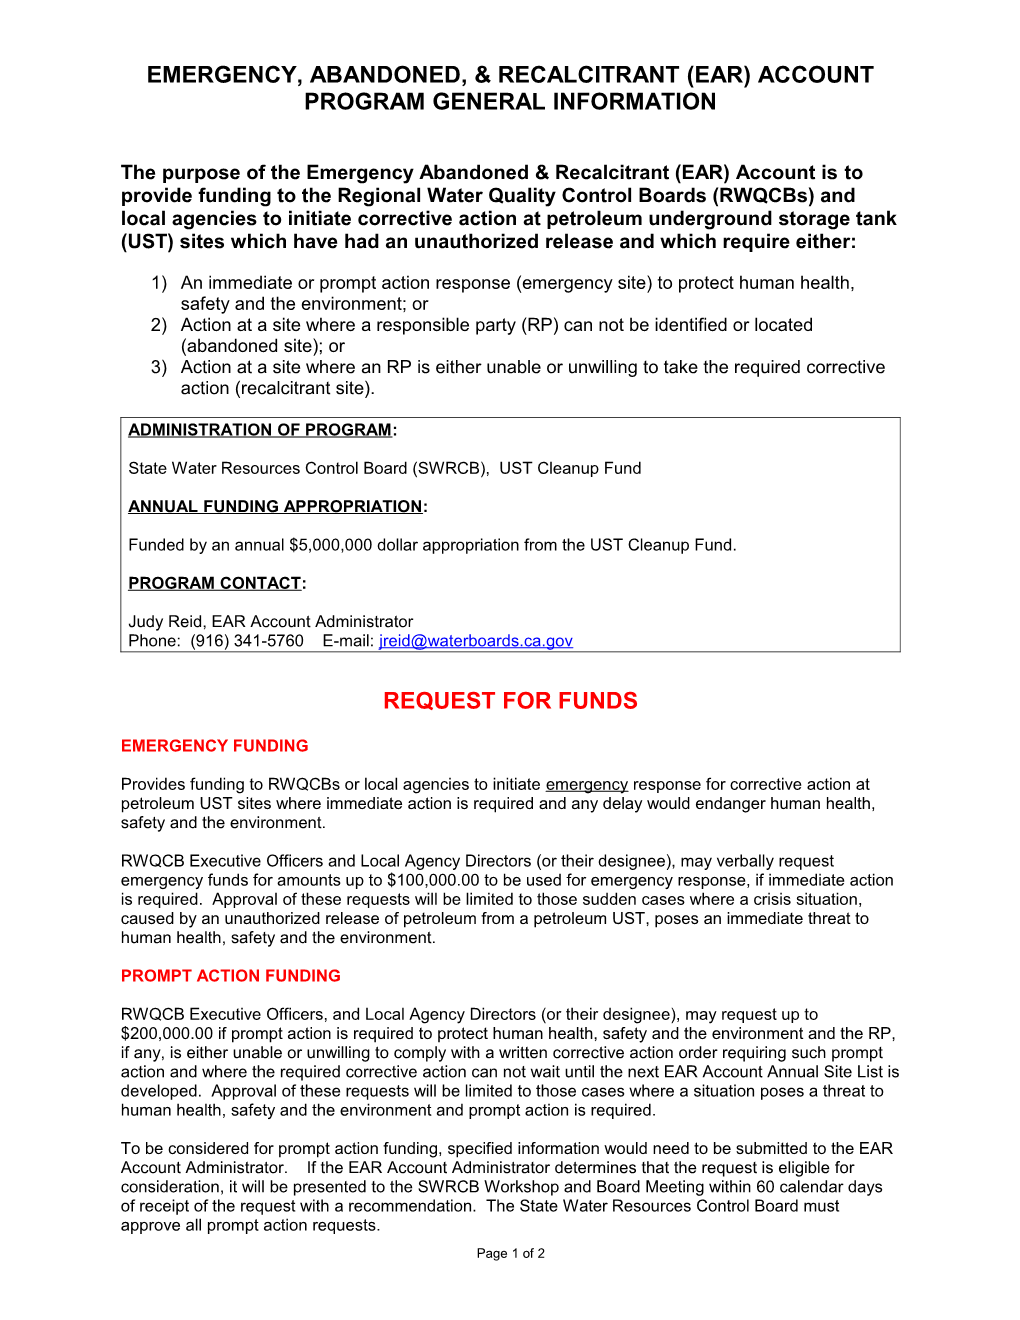 Emergency, Abandoned,& Recalcitrant (Ear) Account Program General Information